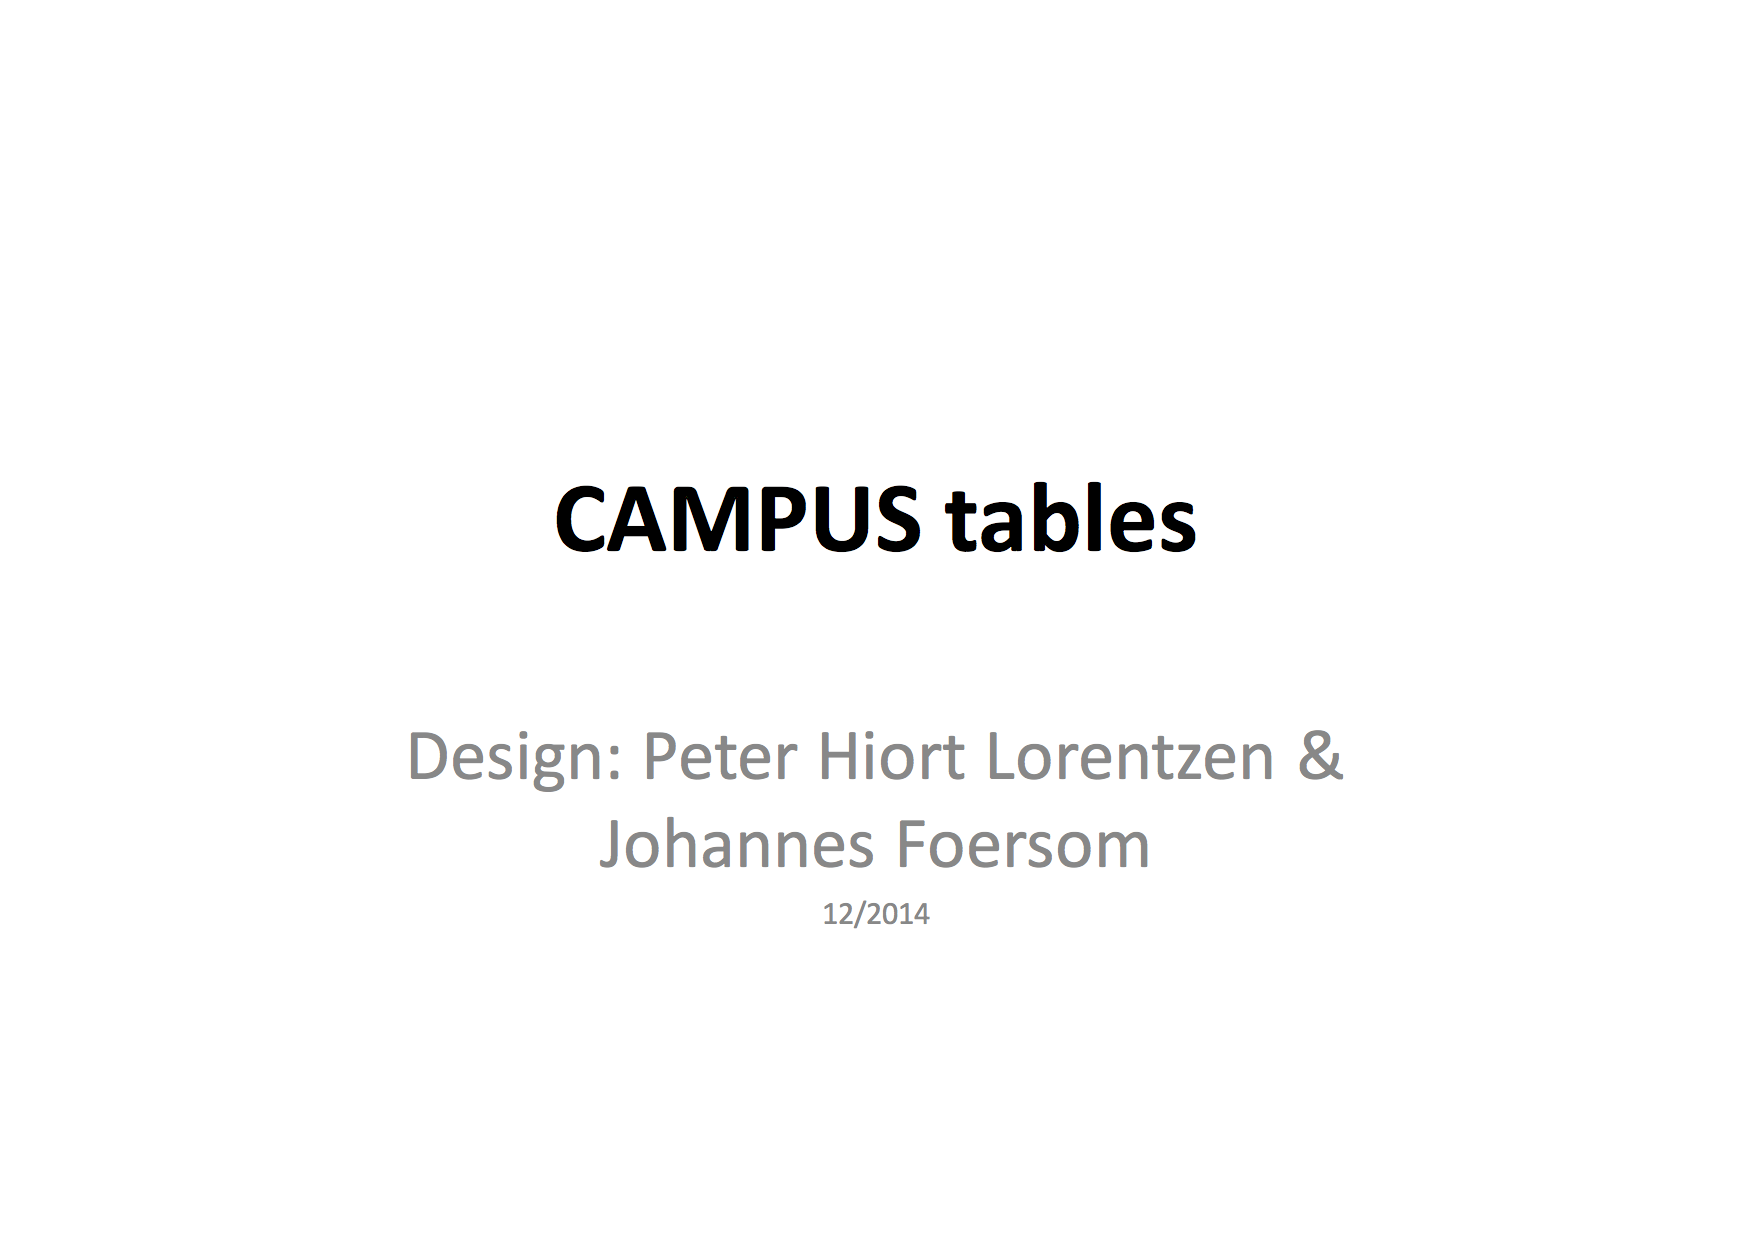 Lammhults Présentation Campus Tables